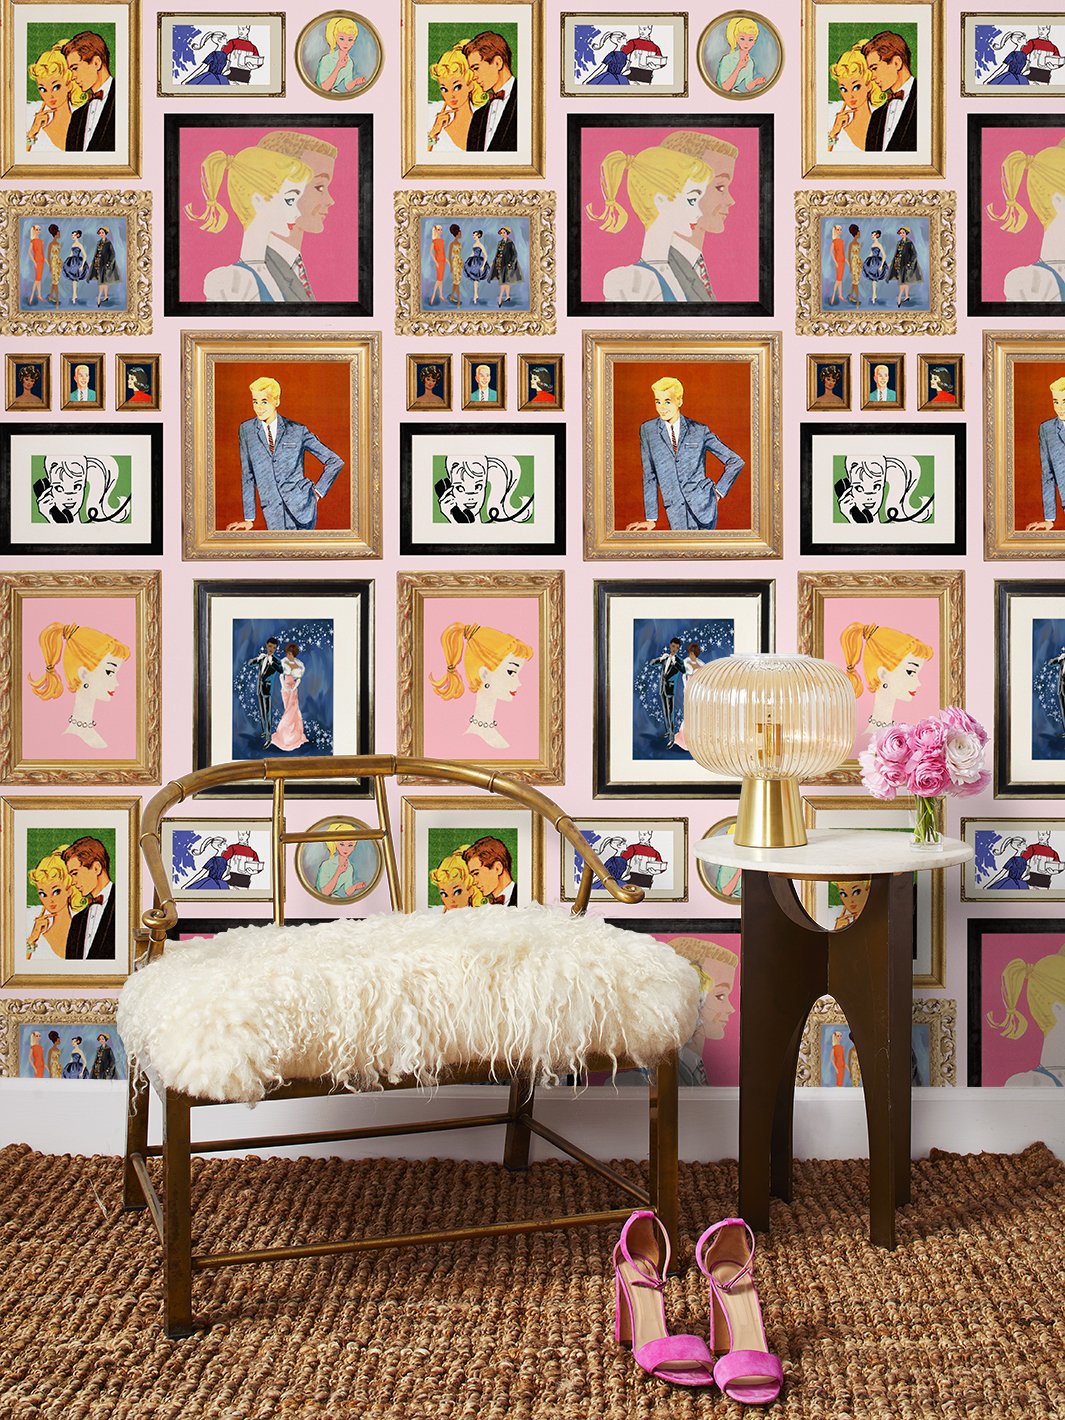 PVC Little Girls pink barbie kids wallpaper For Little girls bedroom  Size 57 Sq Ft at Rs 1700per roll in Jaipur